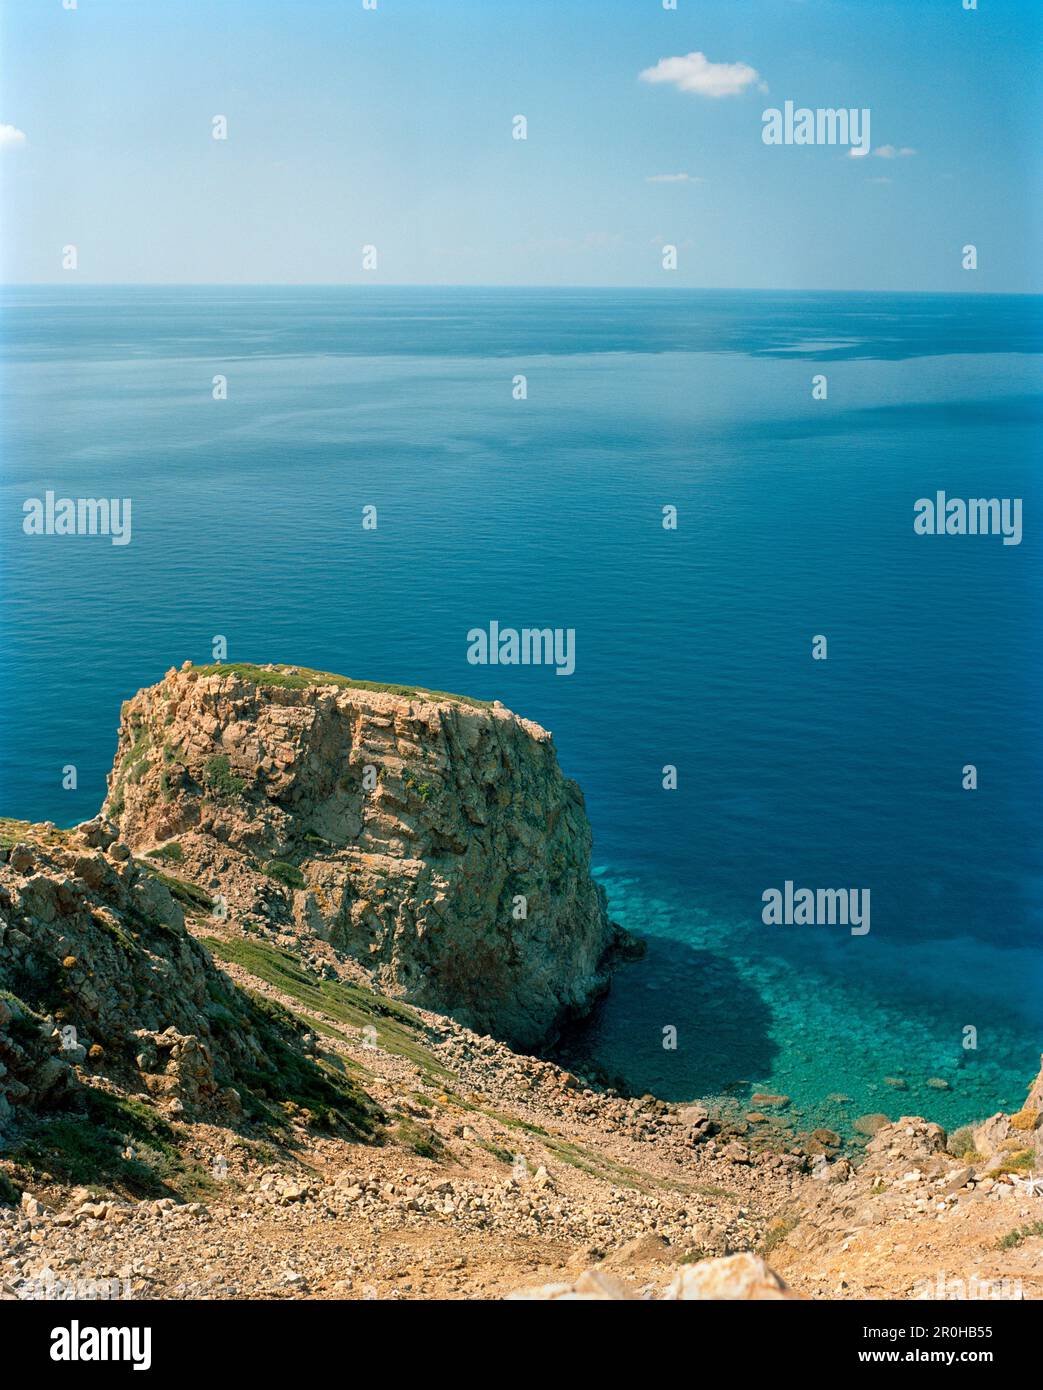 GREECE, Patmos, Dodecanese Island, pigeon rock or peristeronas and the Agean Sea Stock Photo